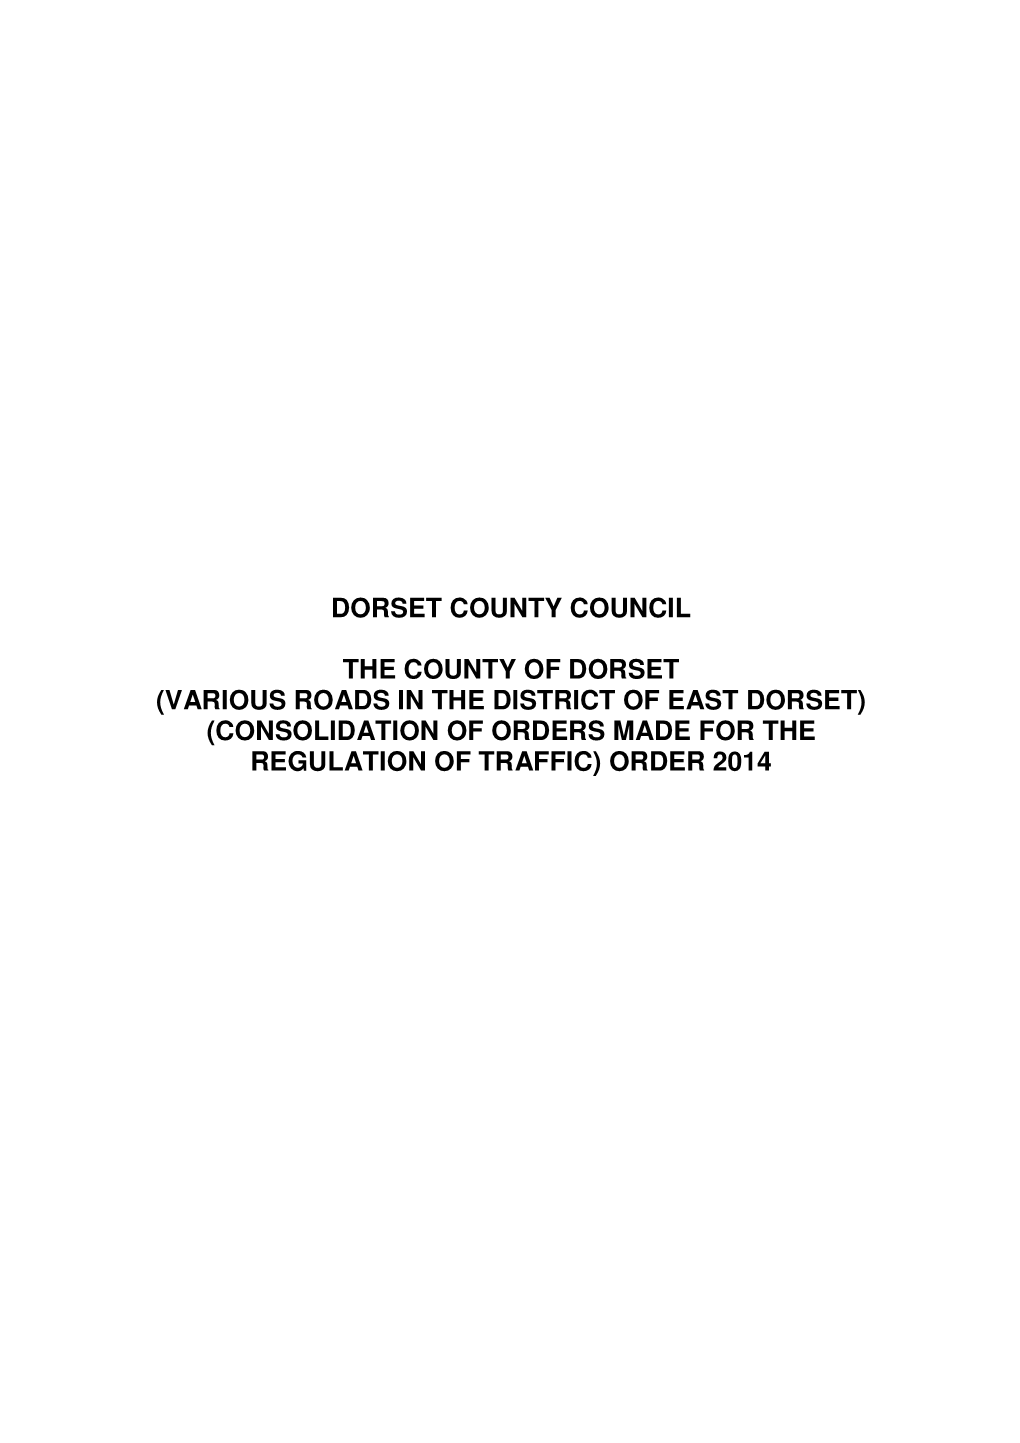 Dorset County Council the County of Dorset (Various